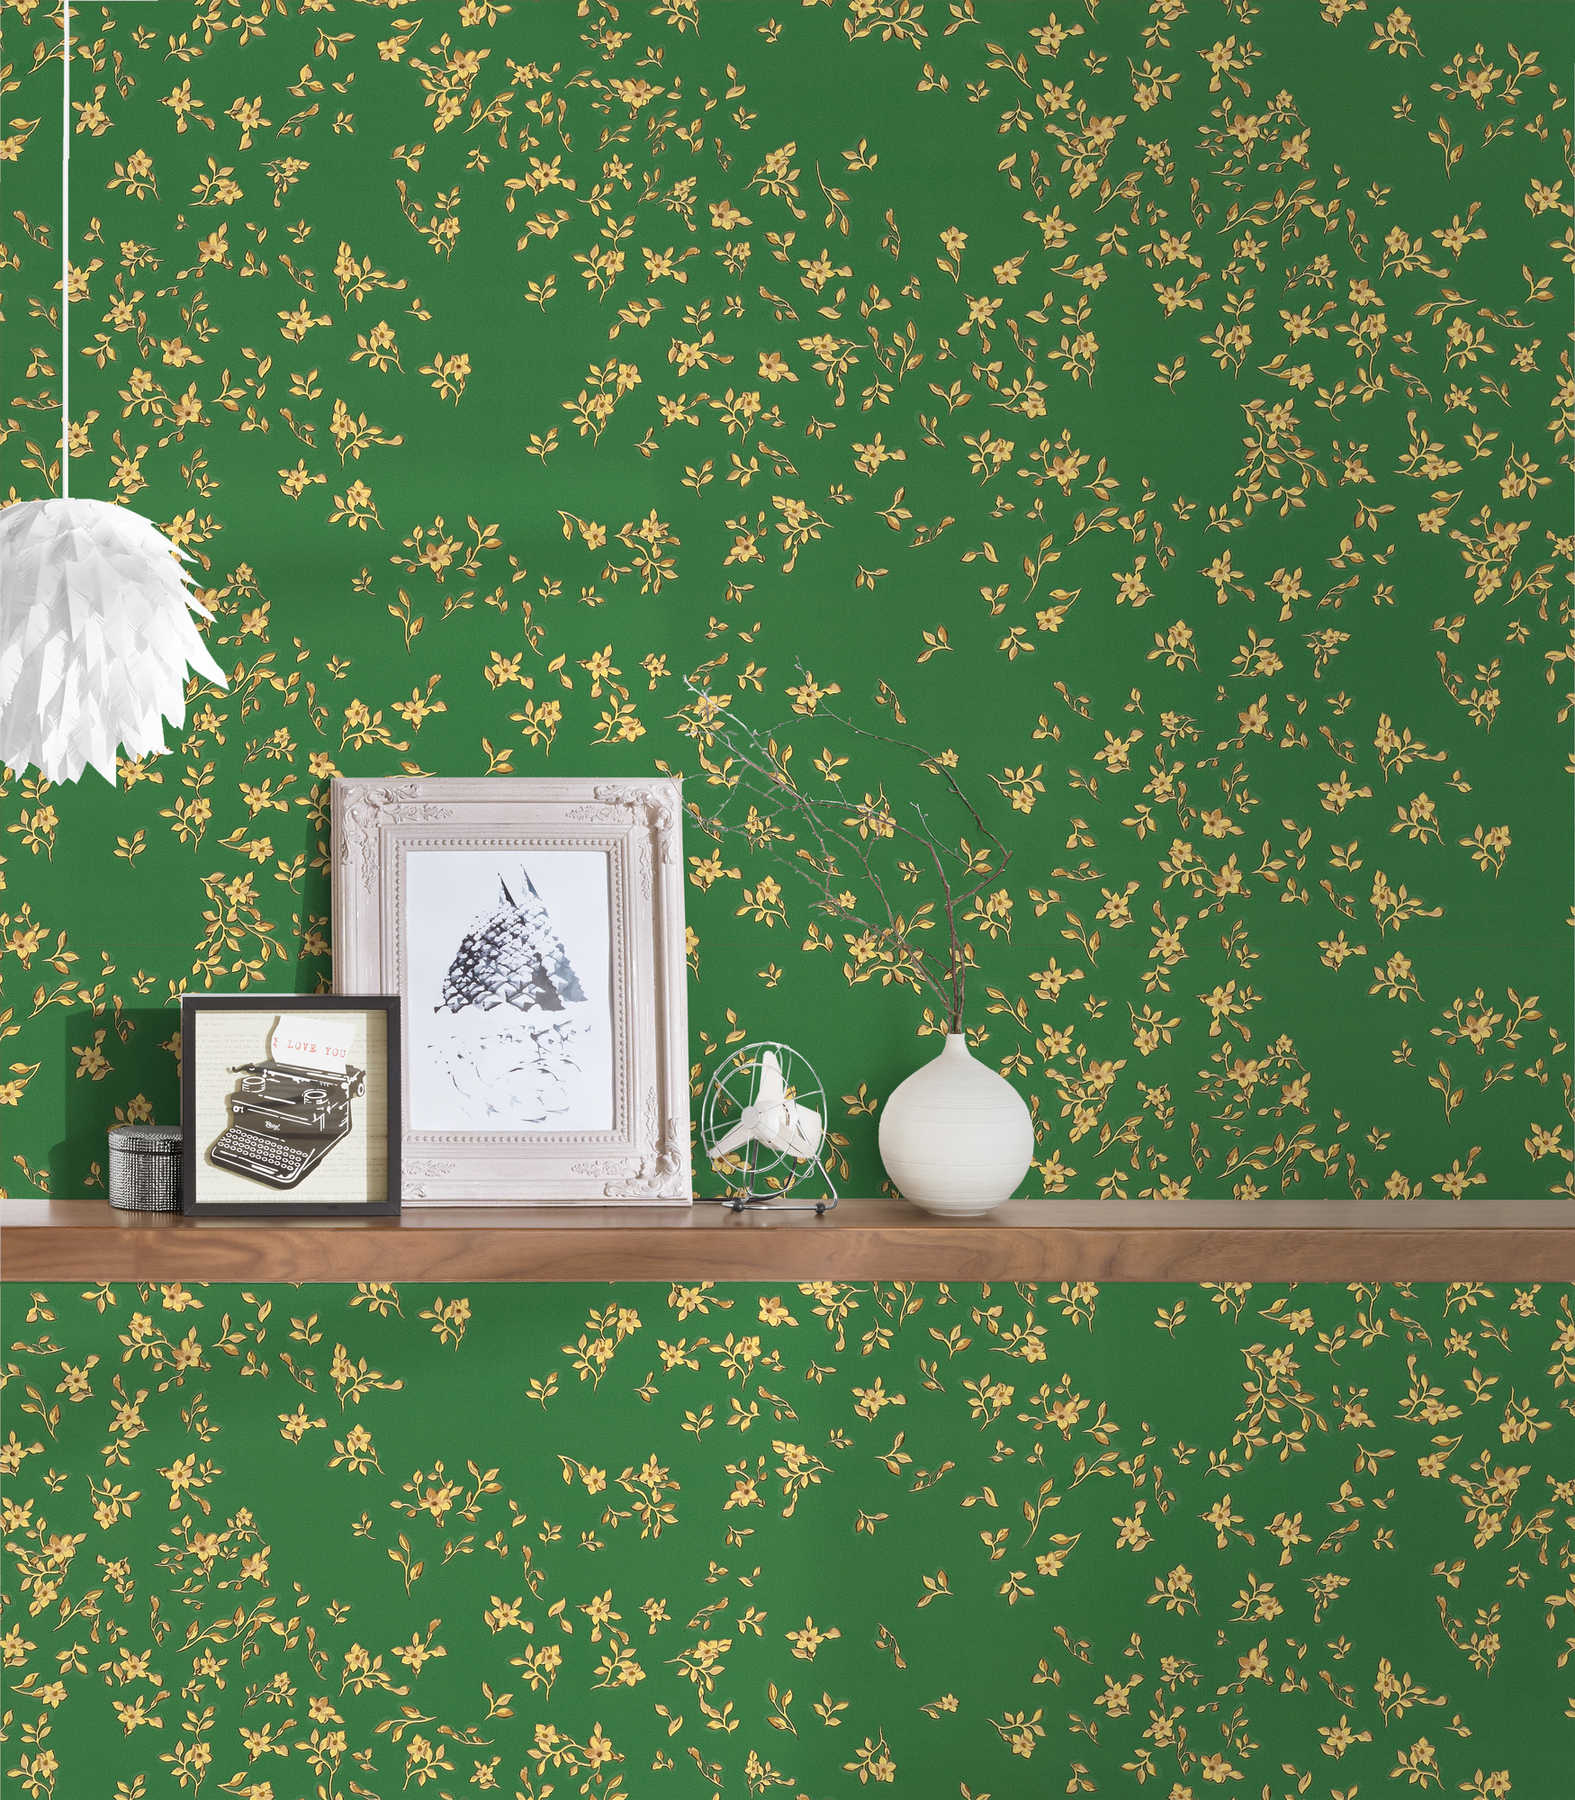             Green VERSACE wallpaper with golden flowers - green, gold, yellow
        